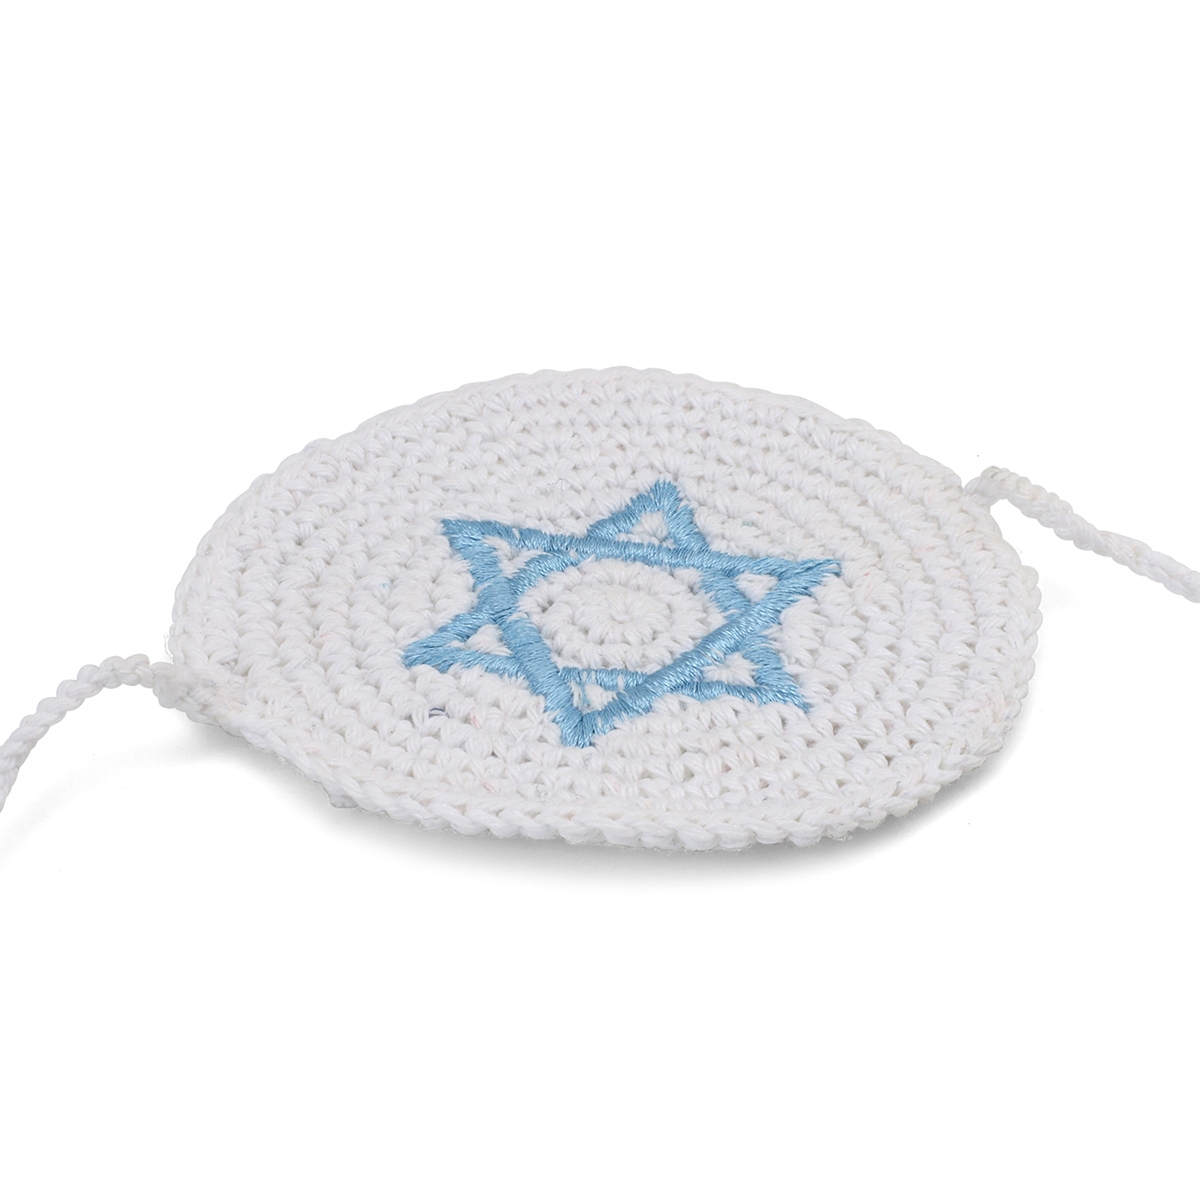 Handmade Knitted Star of David Baby Kippah, Judaica | Judaica Webstore